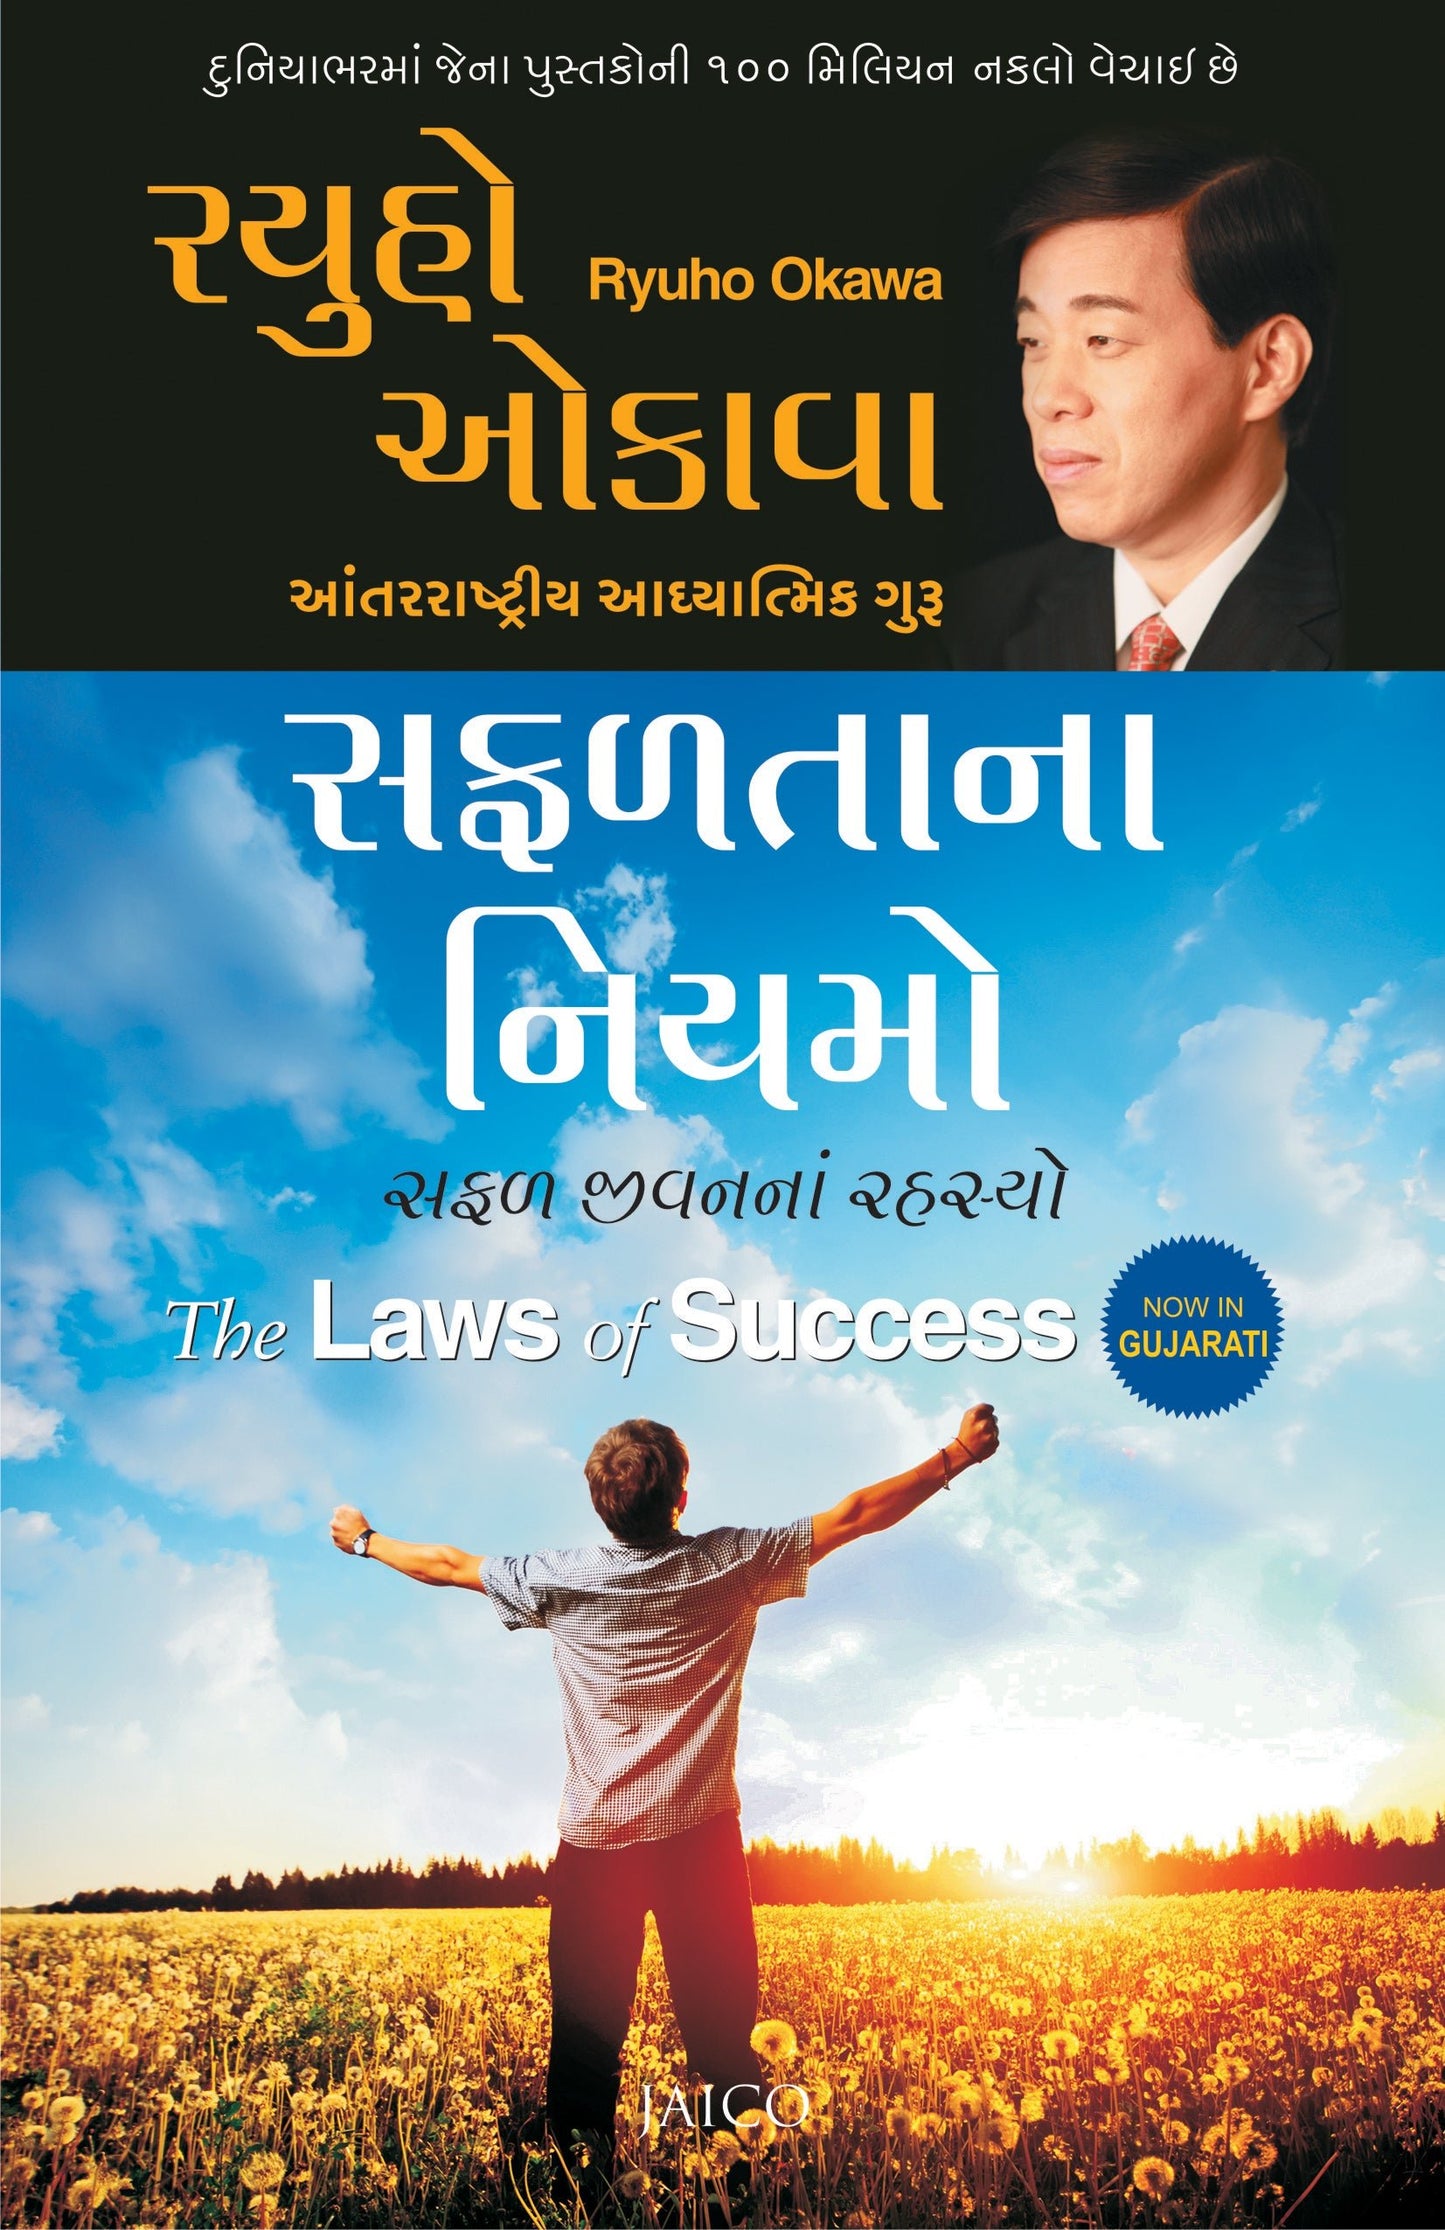 The Laws of Success : A Spiritual Guide to Turning Your Hopes into Reality, Ryuho Okawa, Gujarati - IRH Press International